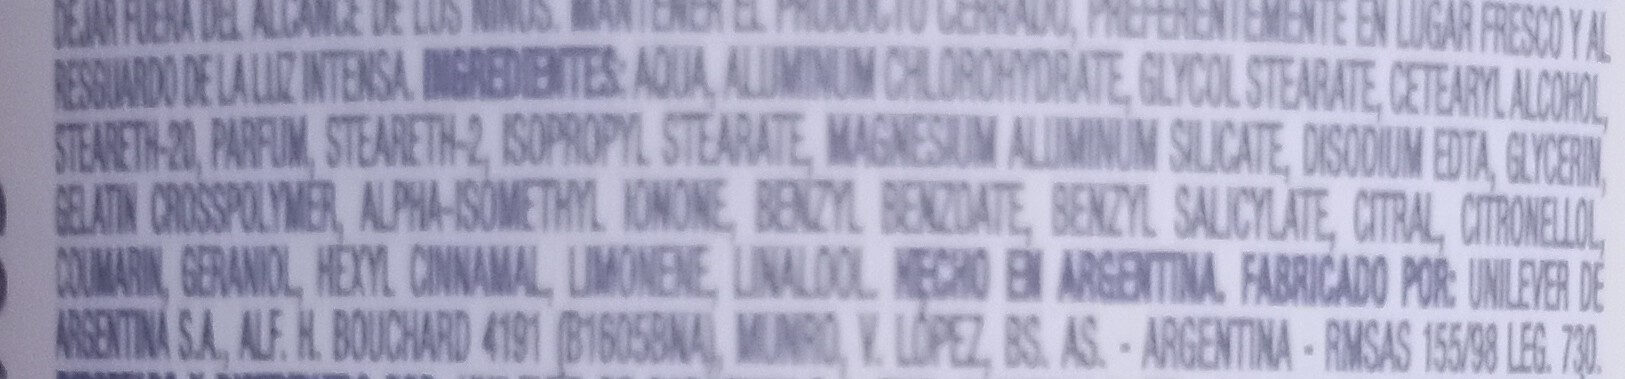 Rexona odorono - Ingredients - es